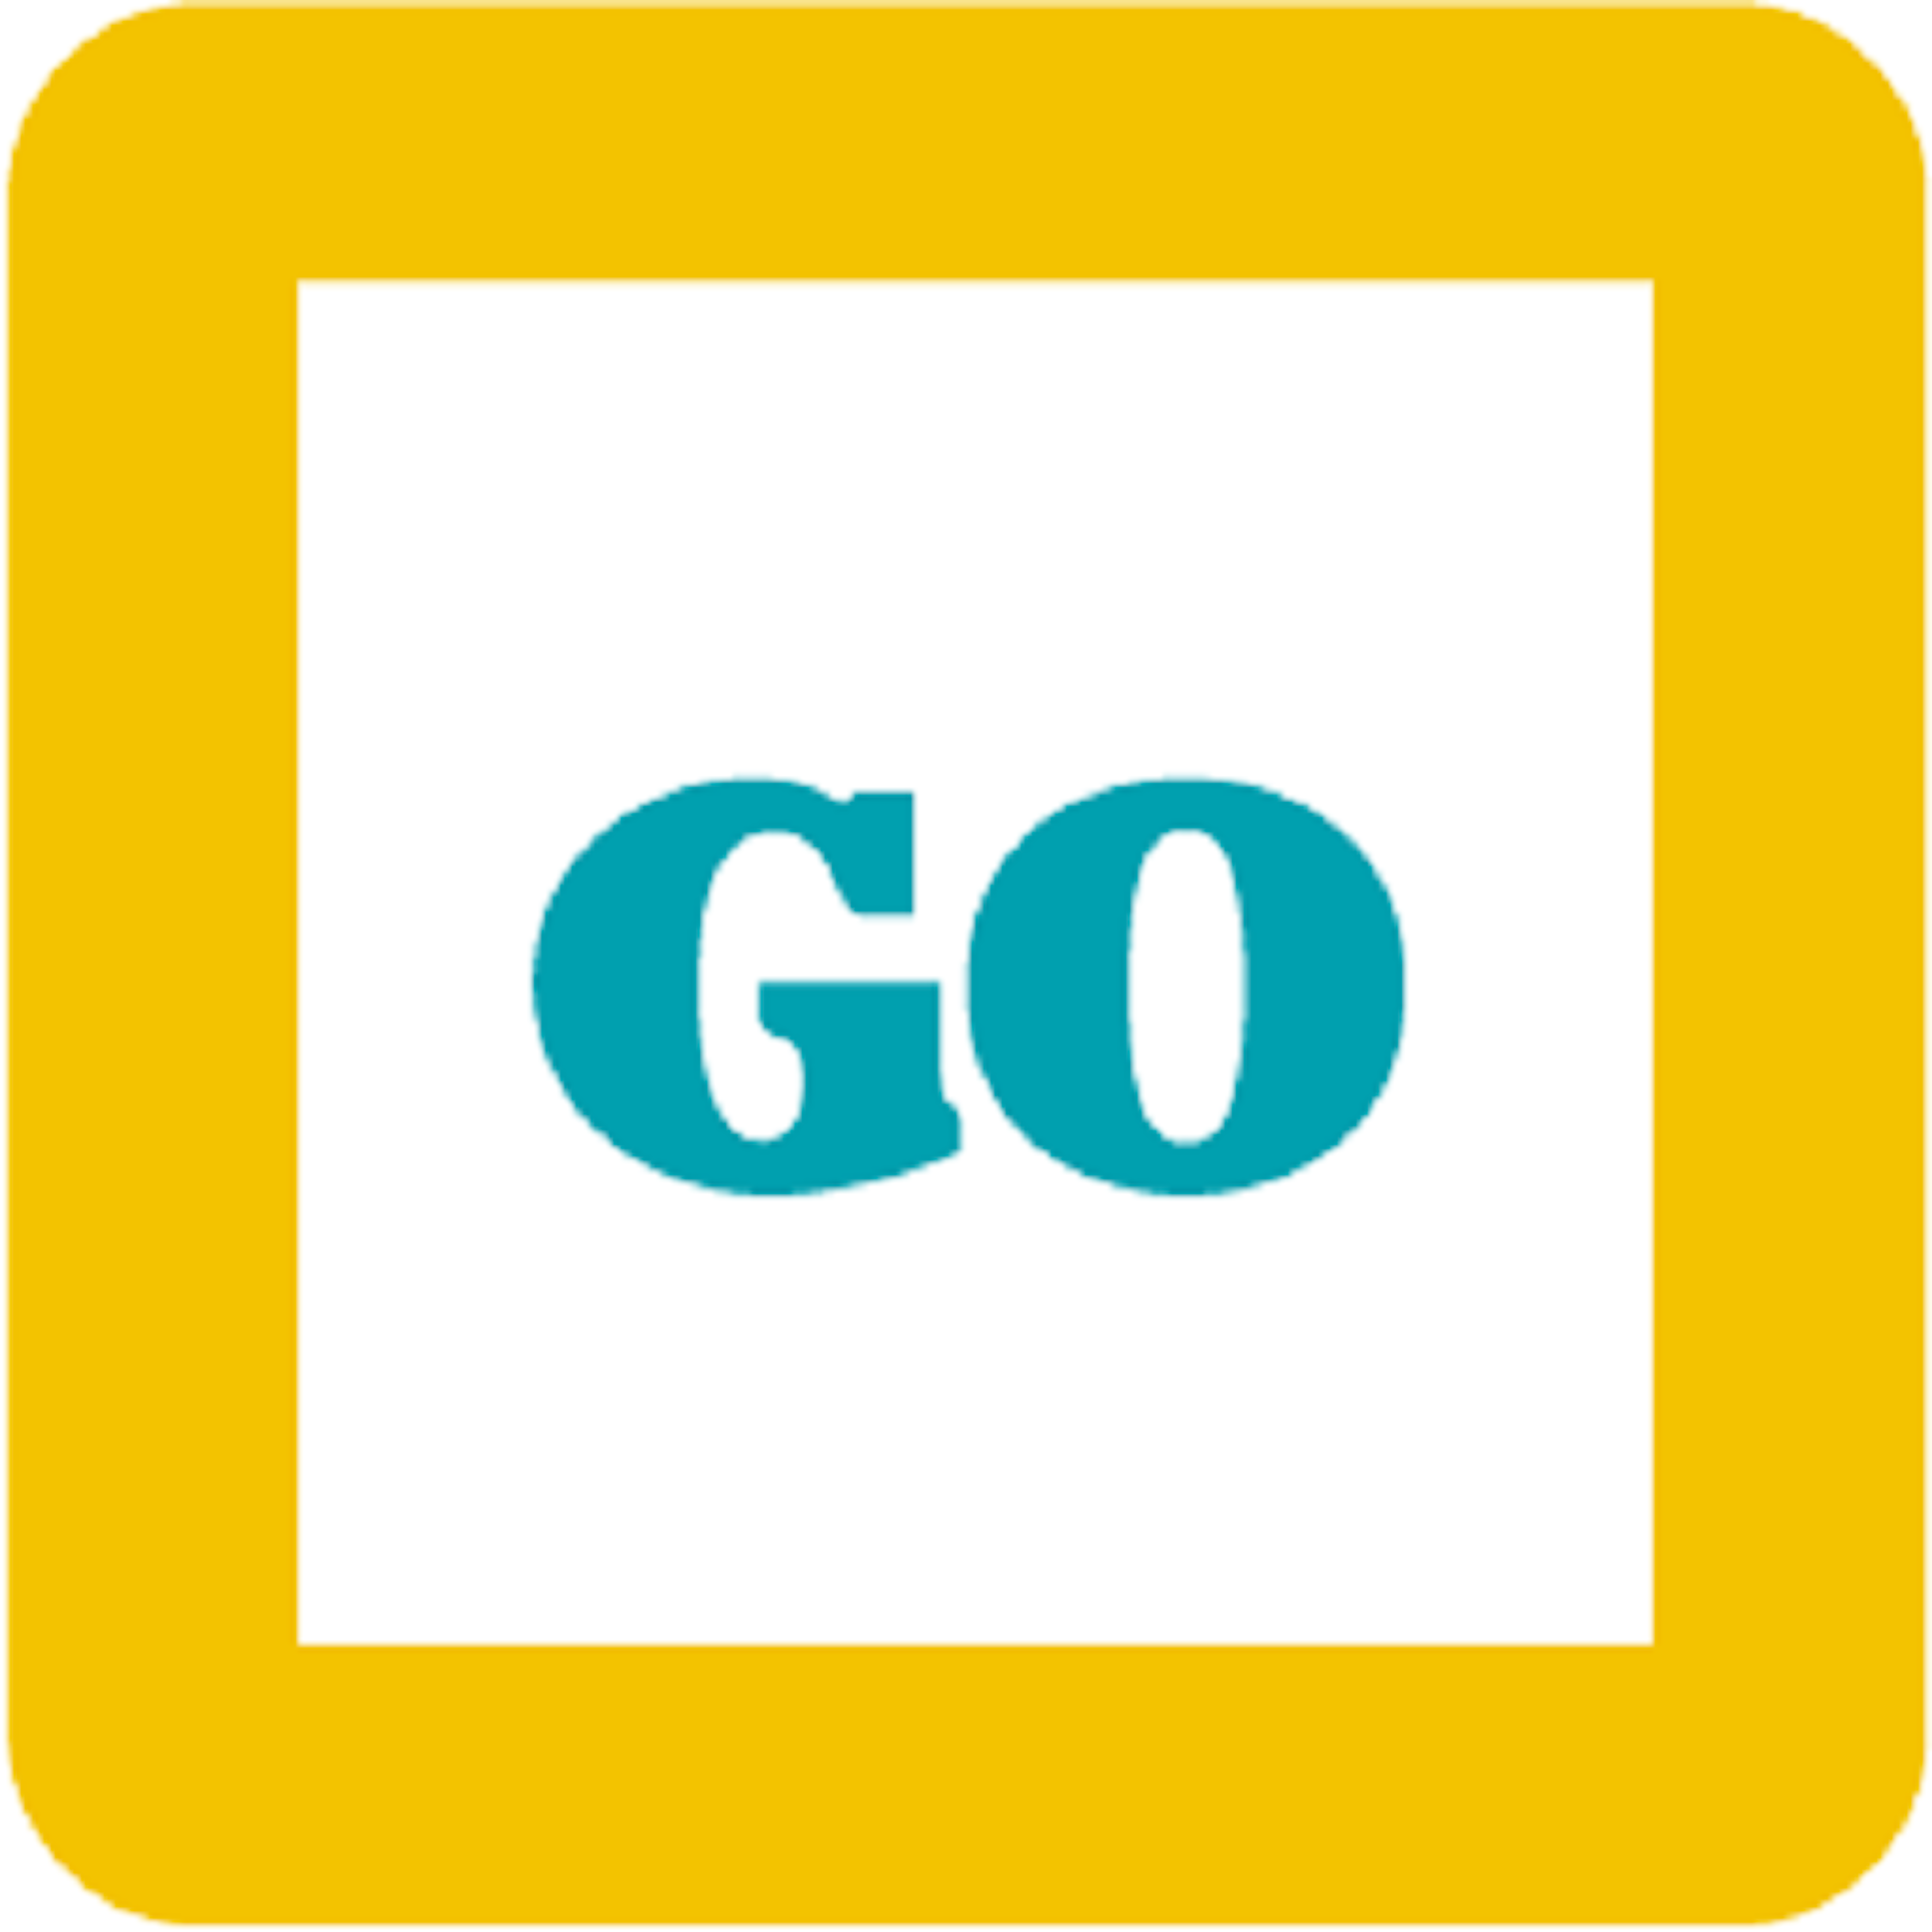 GoCodes Logo